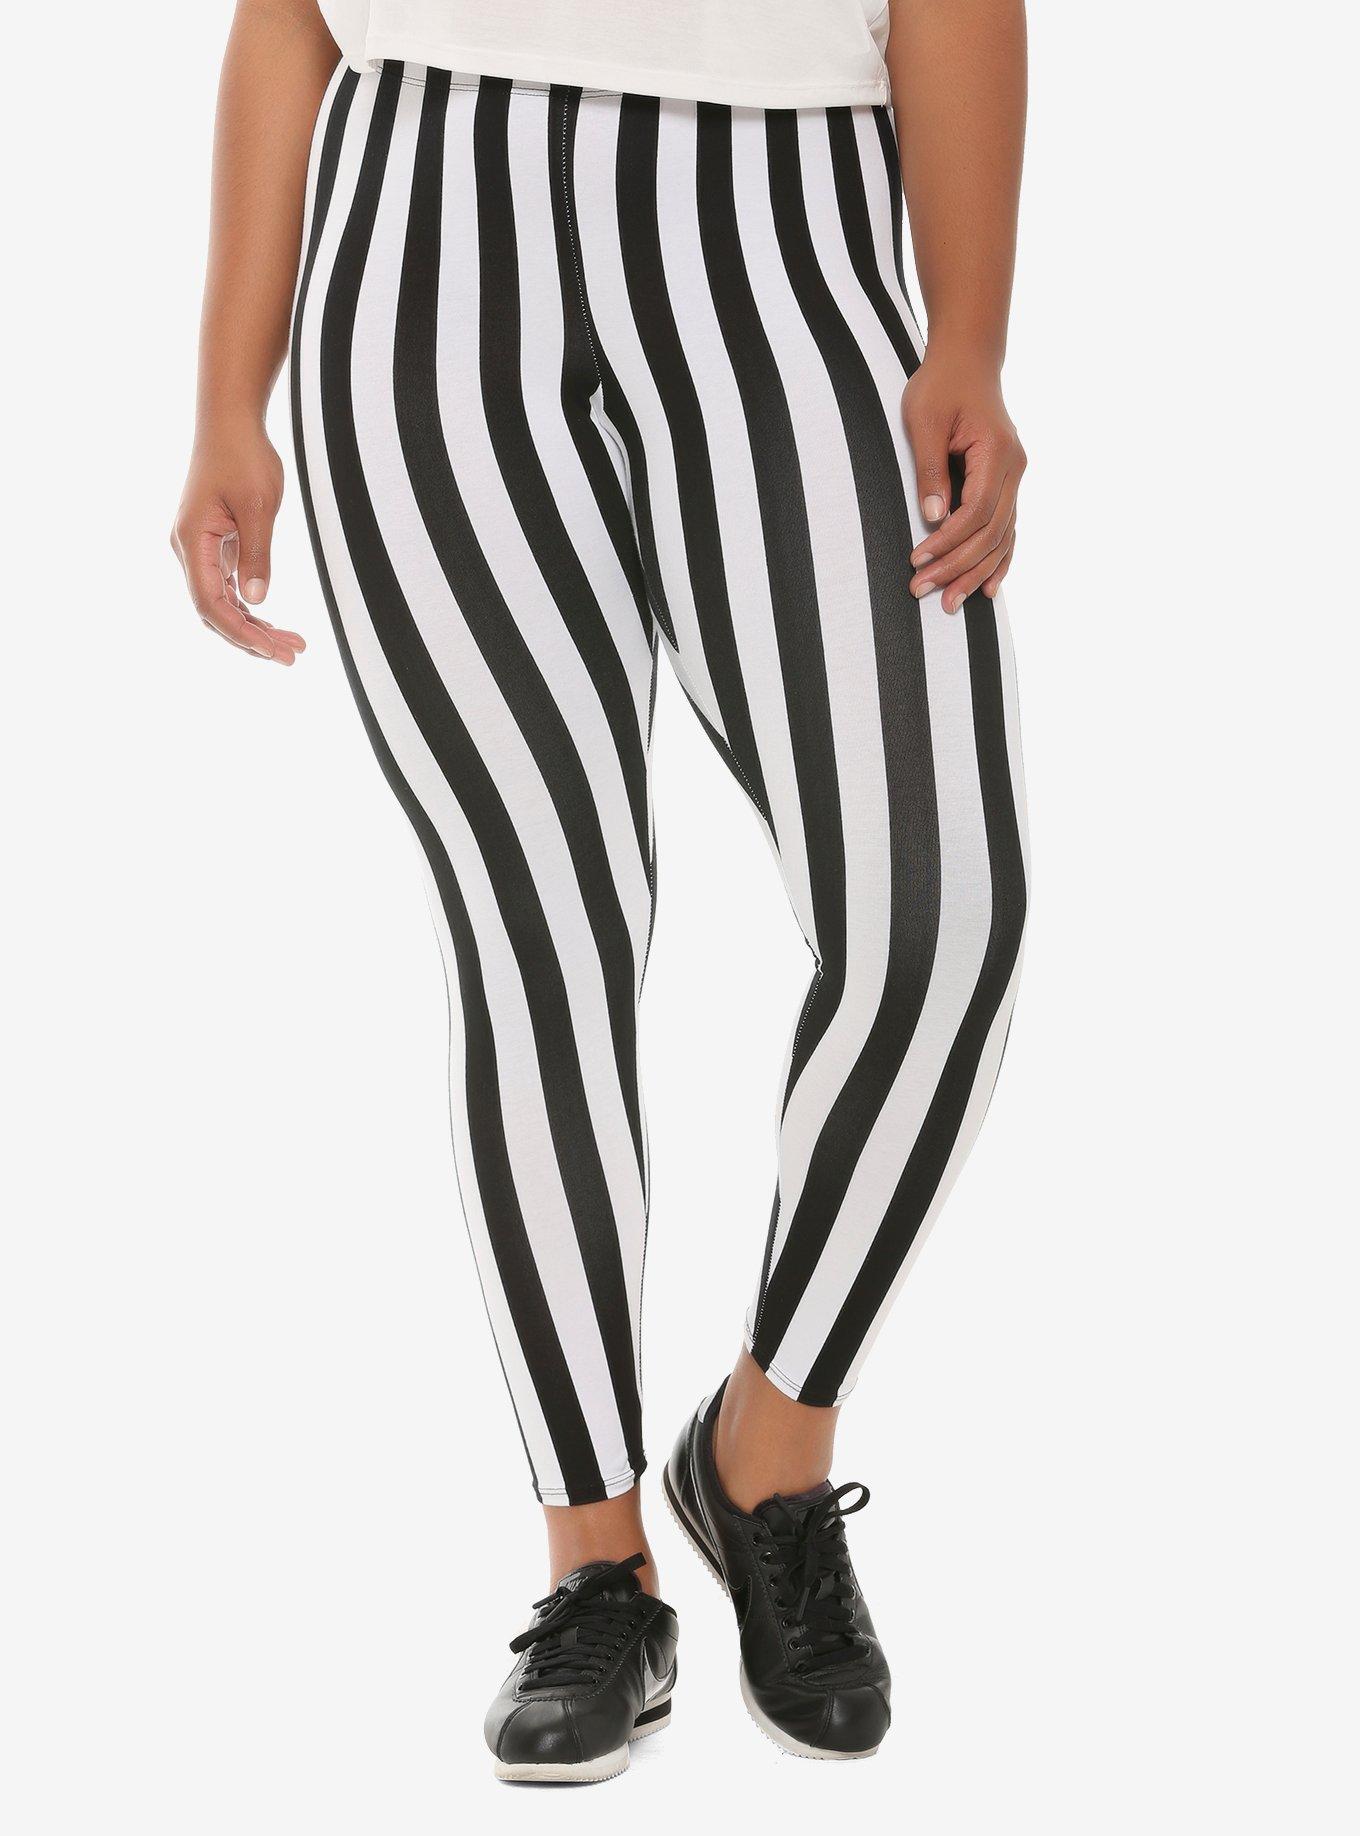 Black & White Vertical Striped Leggings Plus Size | Hot Topic